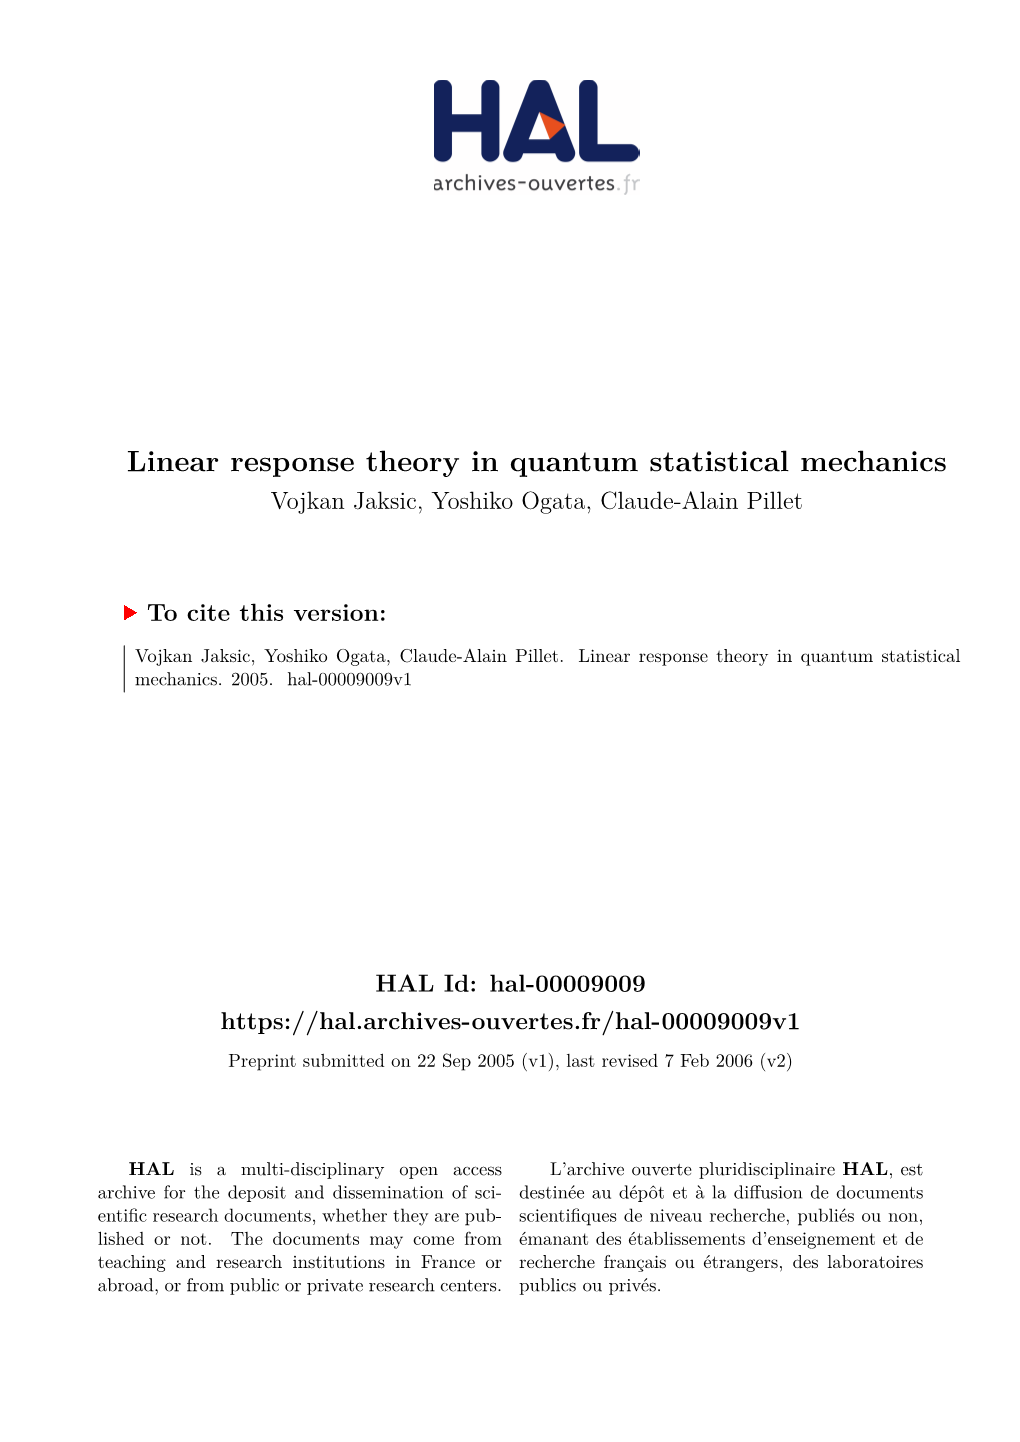 Linear Response Theory in Quantum Statistical Mechanics Vojkan Jaksic, Yoshiko Ogata, Claude-Alain Pillet